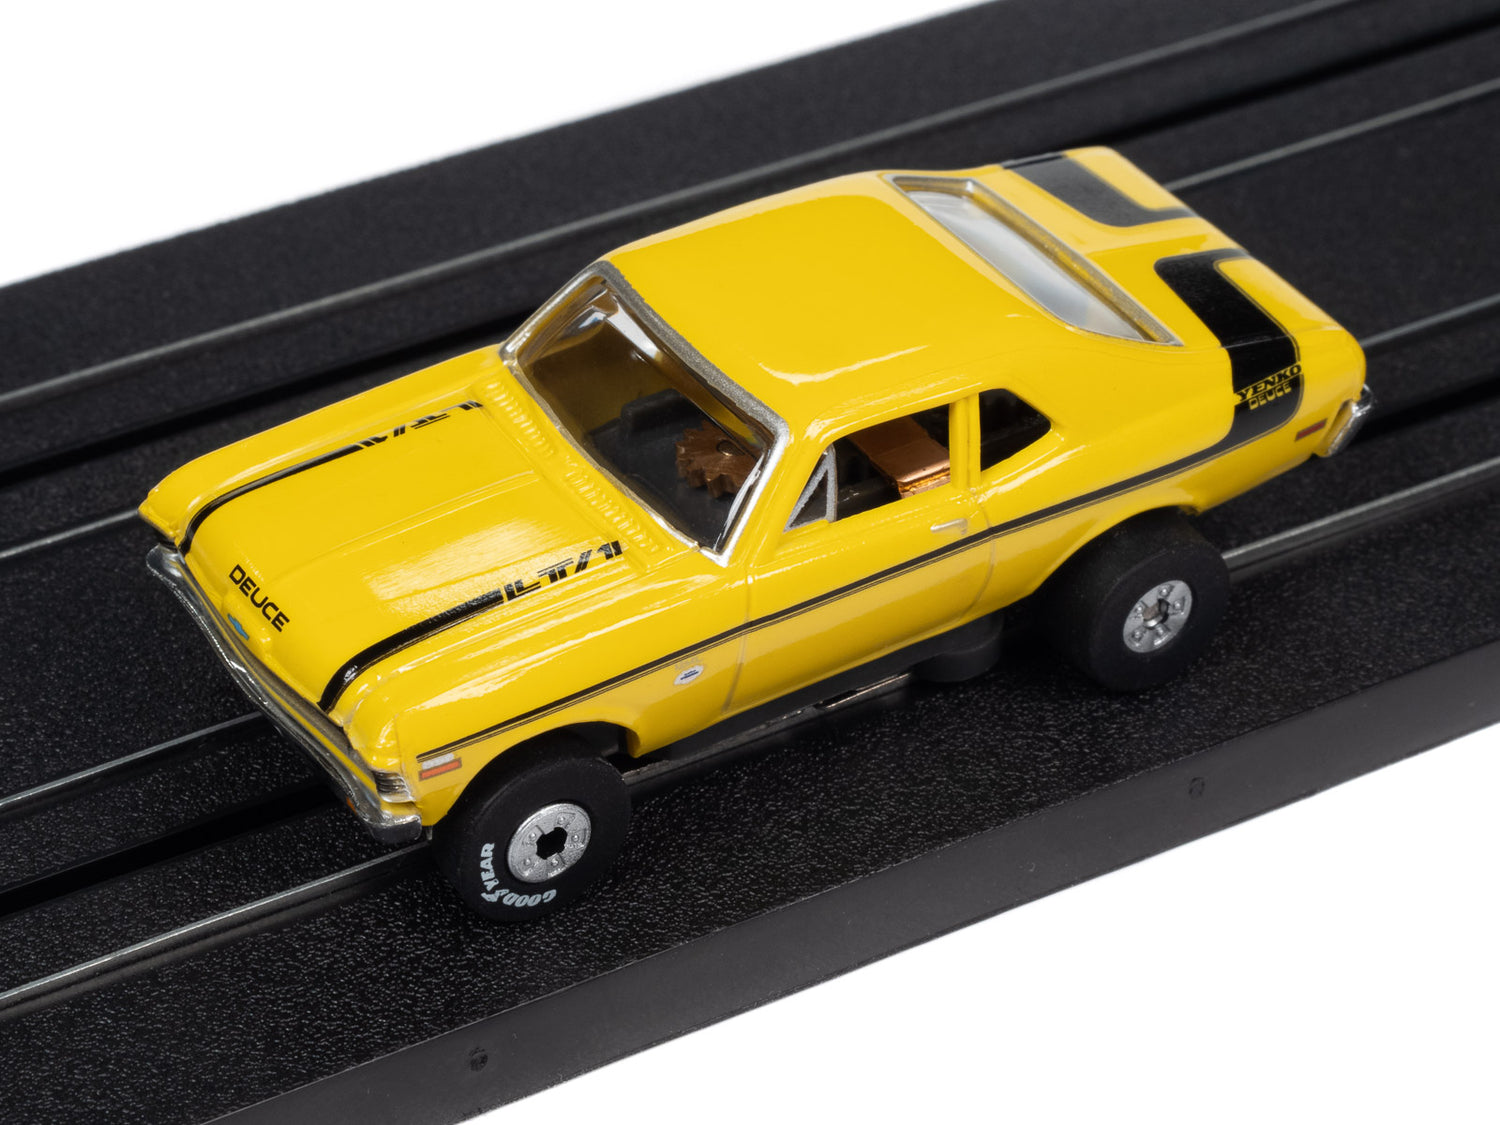 Auto World Thunderjet Yenko 1970 Chevrolet Nova (Yellow) HO Slot Car